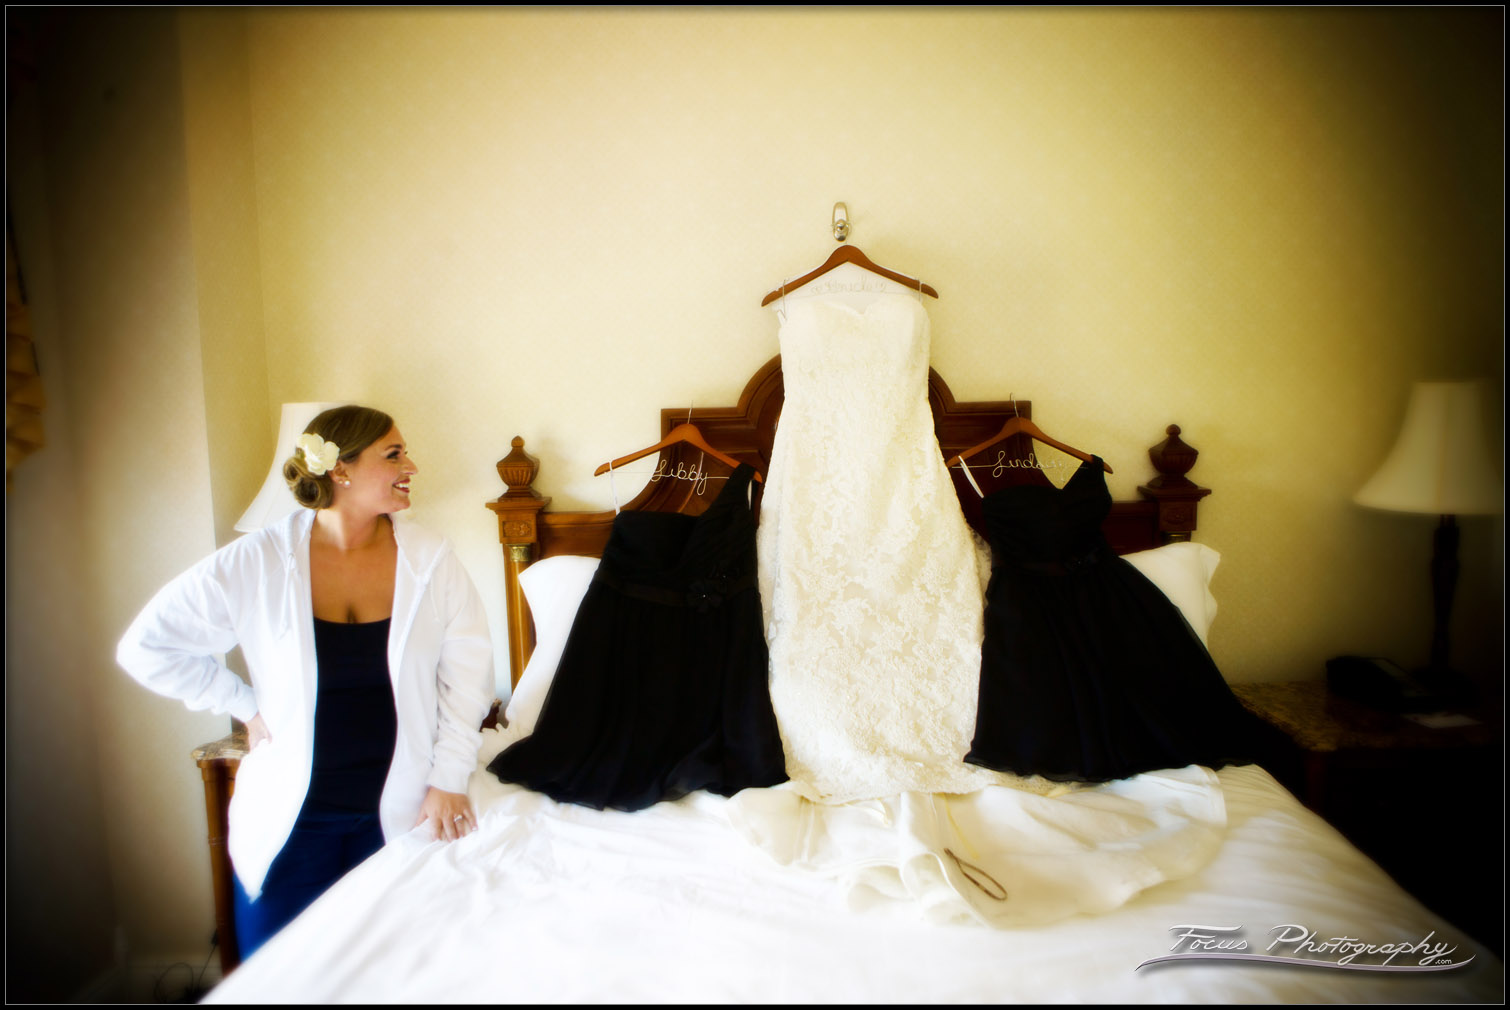 Bride admiring her dress choices.